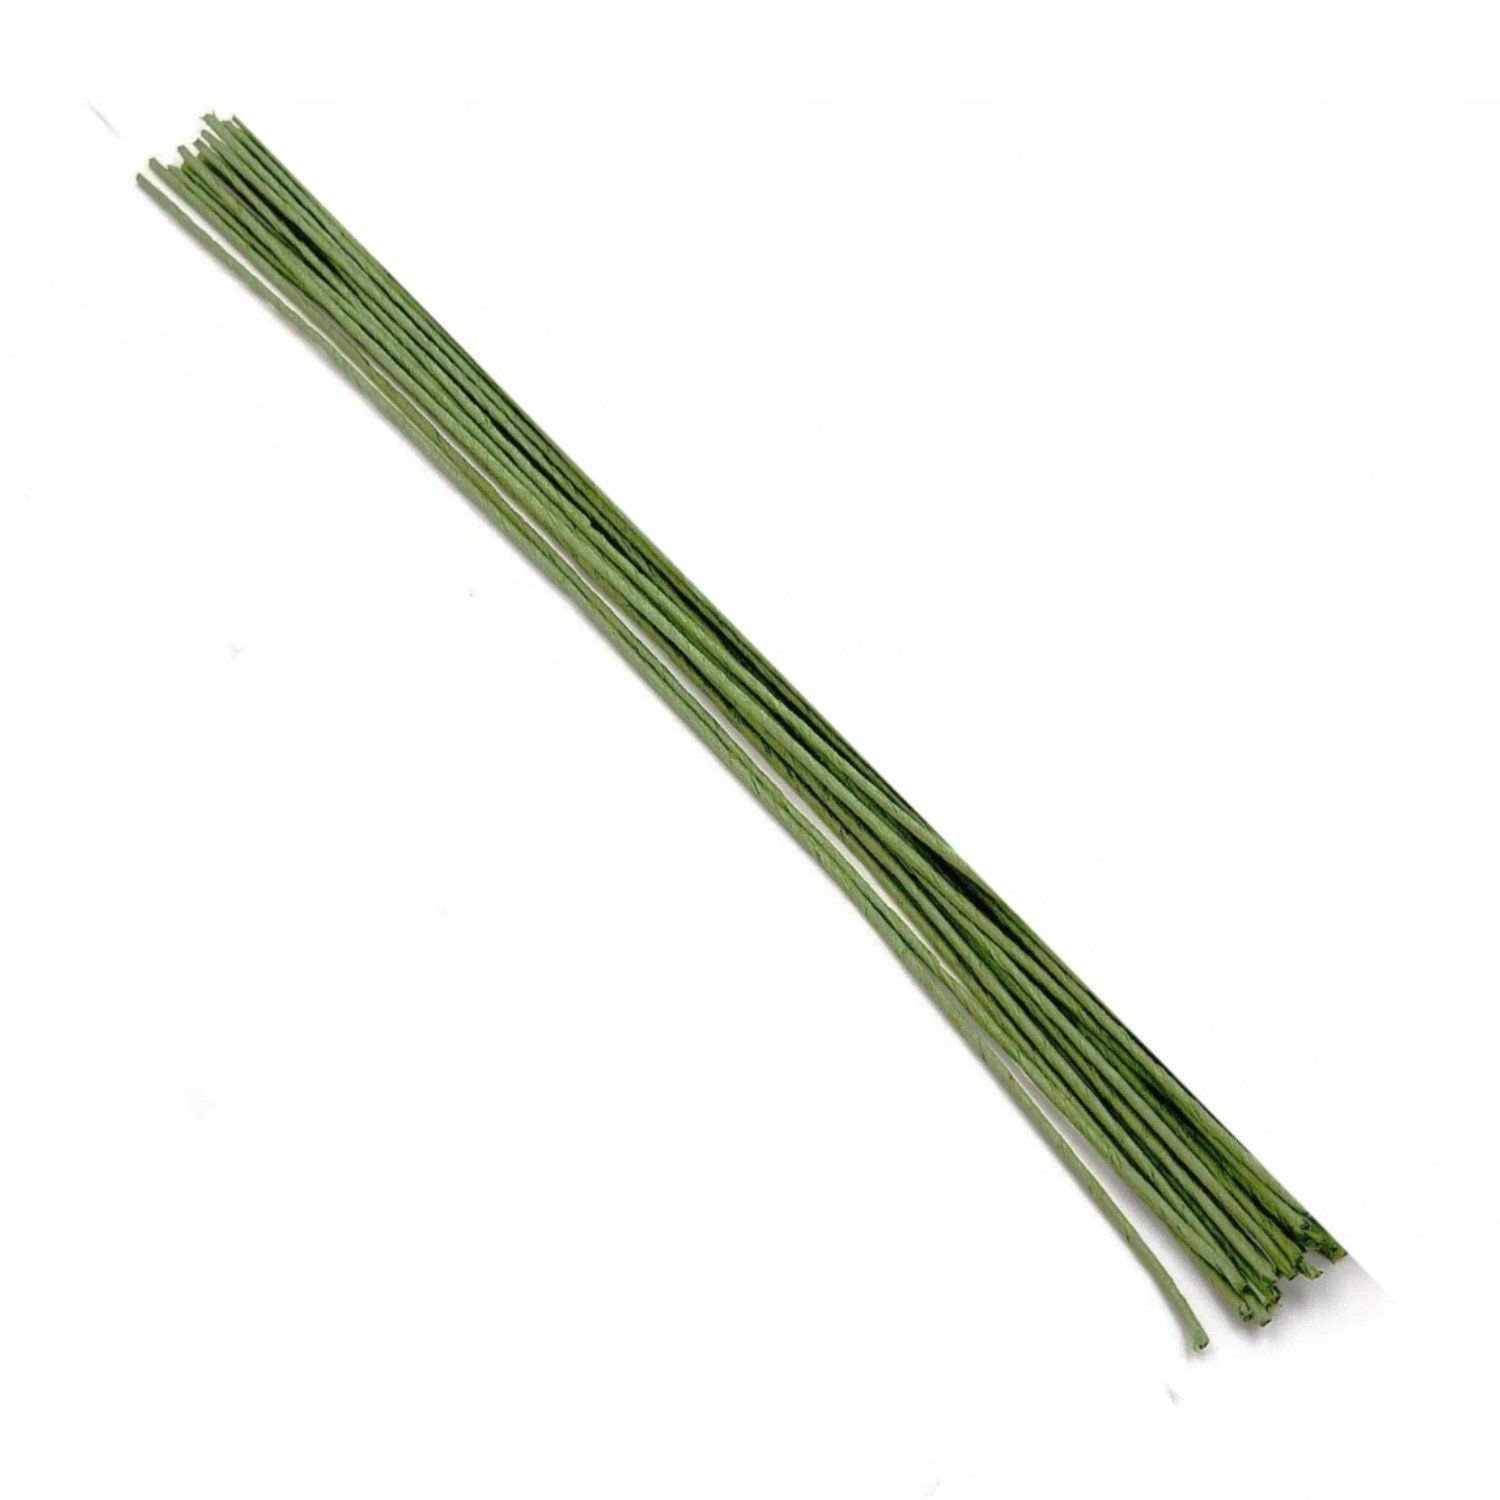 Roco Paper Çiçek Teli 4 mm. - 4'lü Paket 60 cm - Yeşil